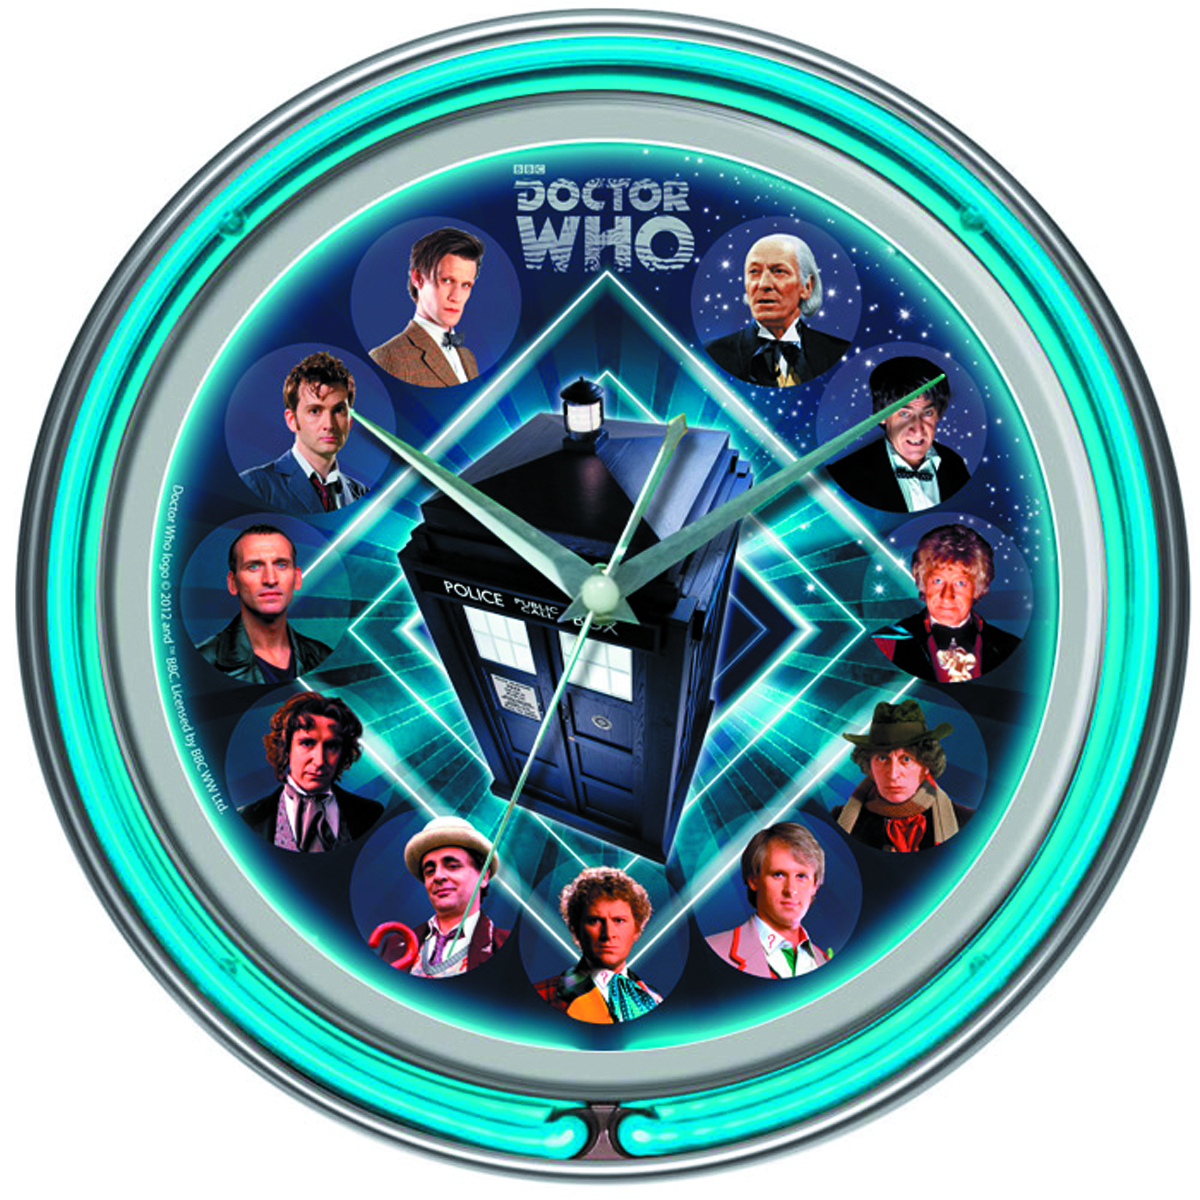 Доктор час doctor clock. Doctor who часы. Clockwork Dr who. Часы мастера доктор кто. Часы доктор Хафнер.